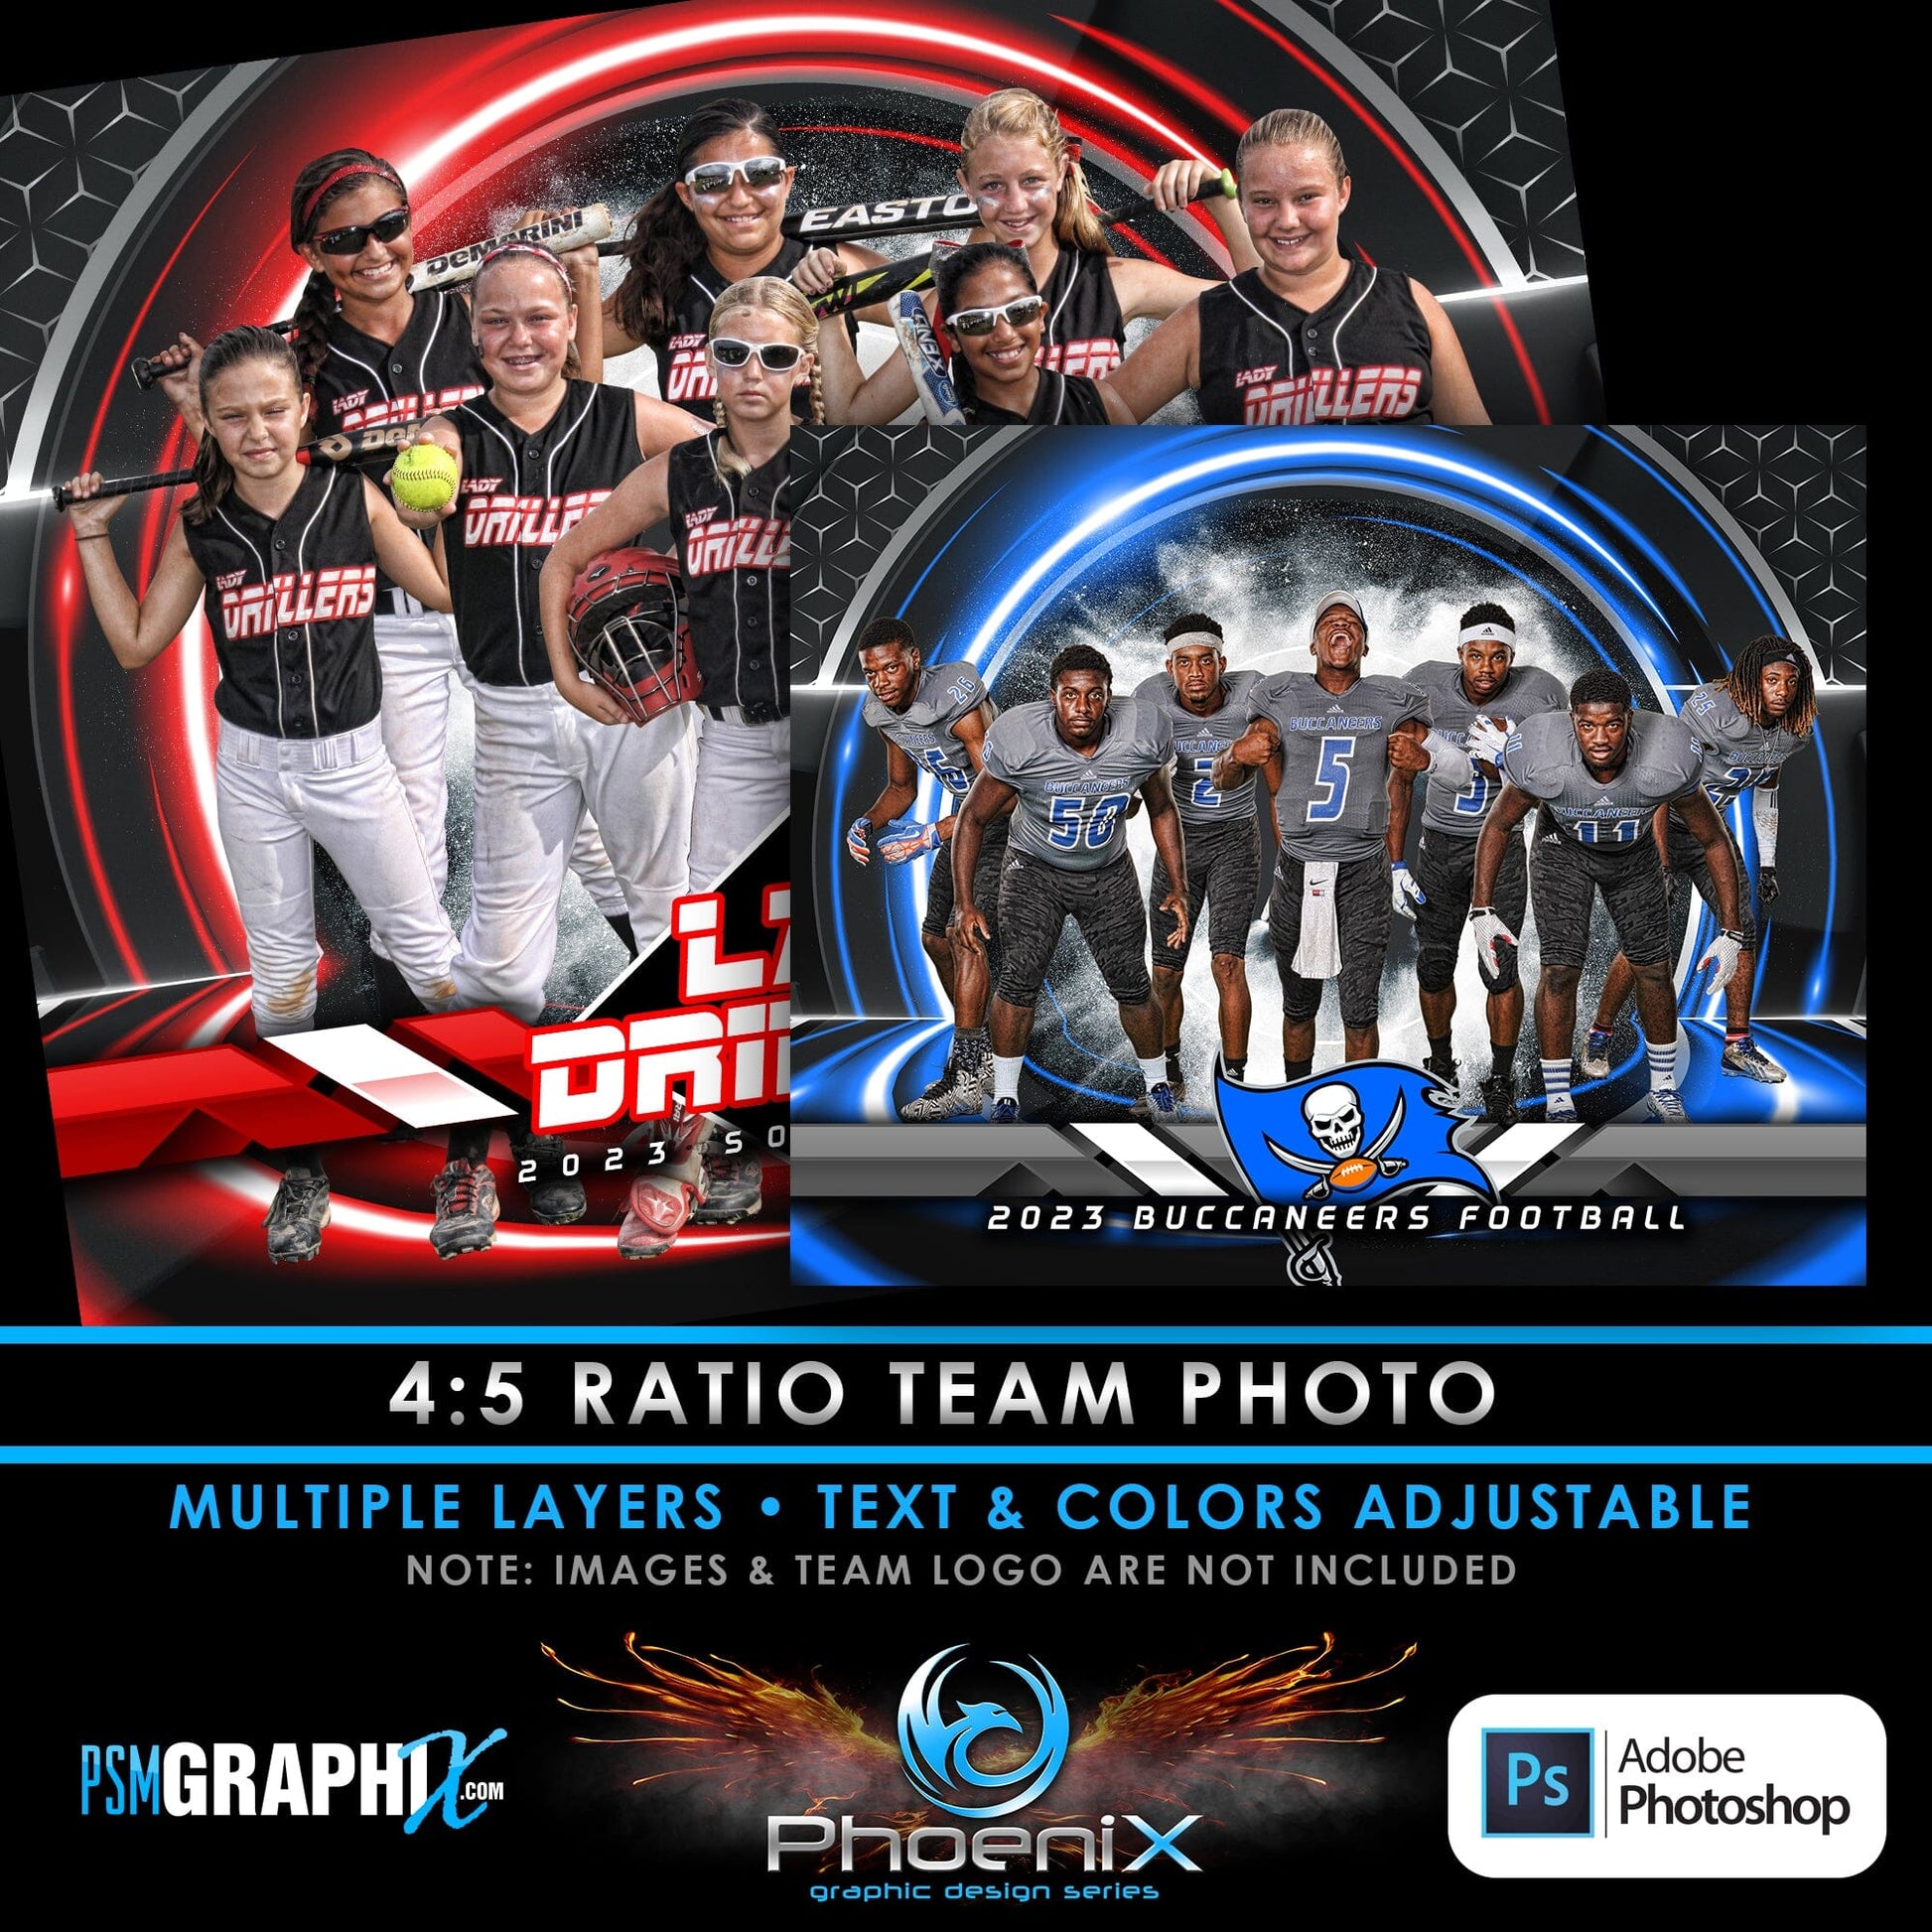 Portal Edition - Phoenix Series - Team Print/Poster/Banner-Photoshop Template - PSMGraphix